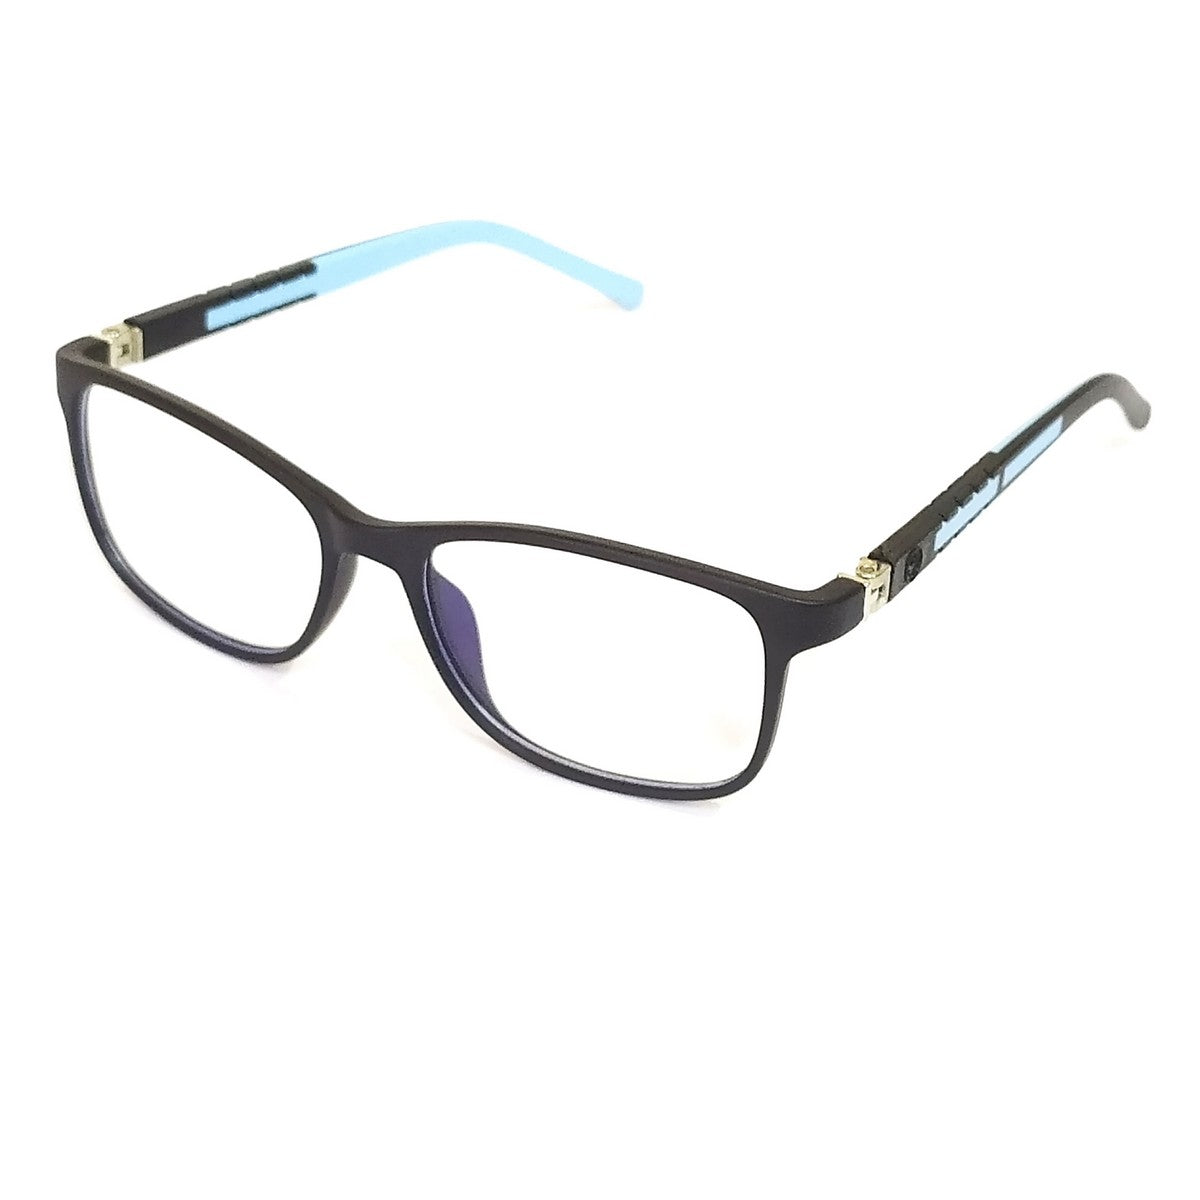 Classic Black & Blue Square Kids Blue Light Blocking Glasses - Designed for Kids 6-10 Years